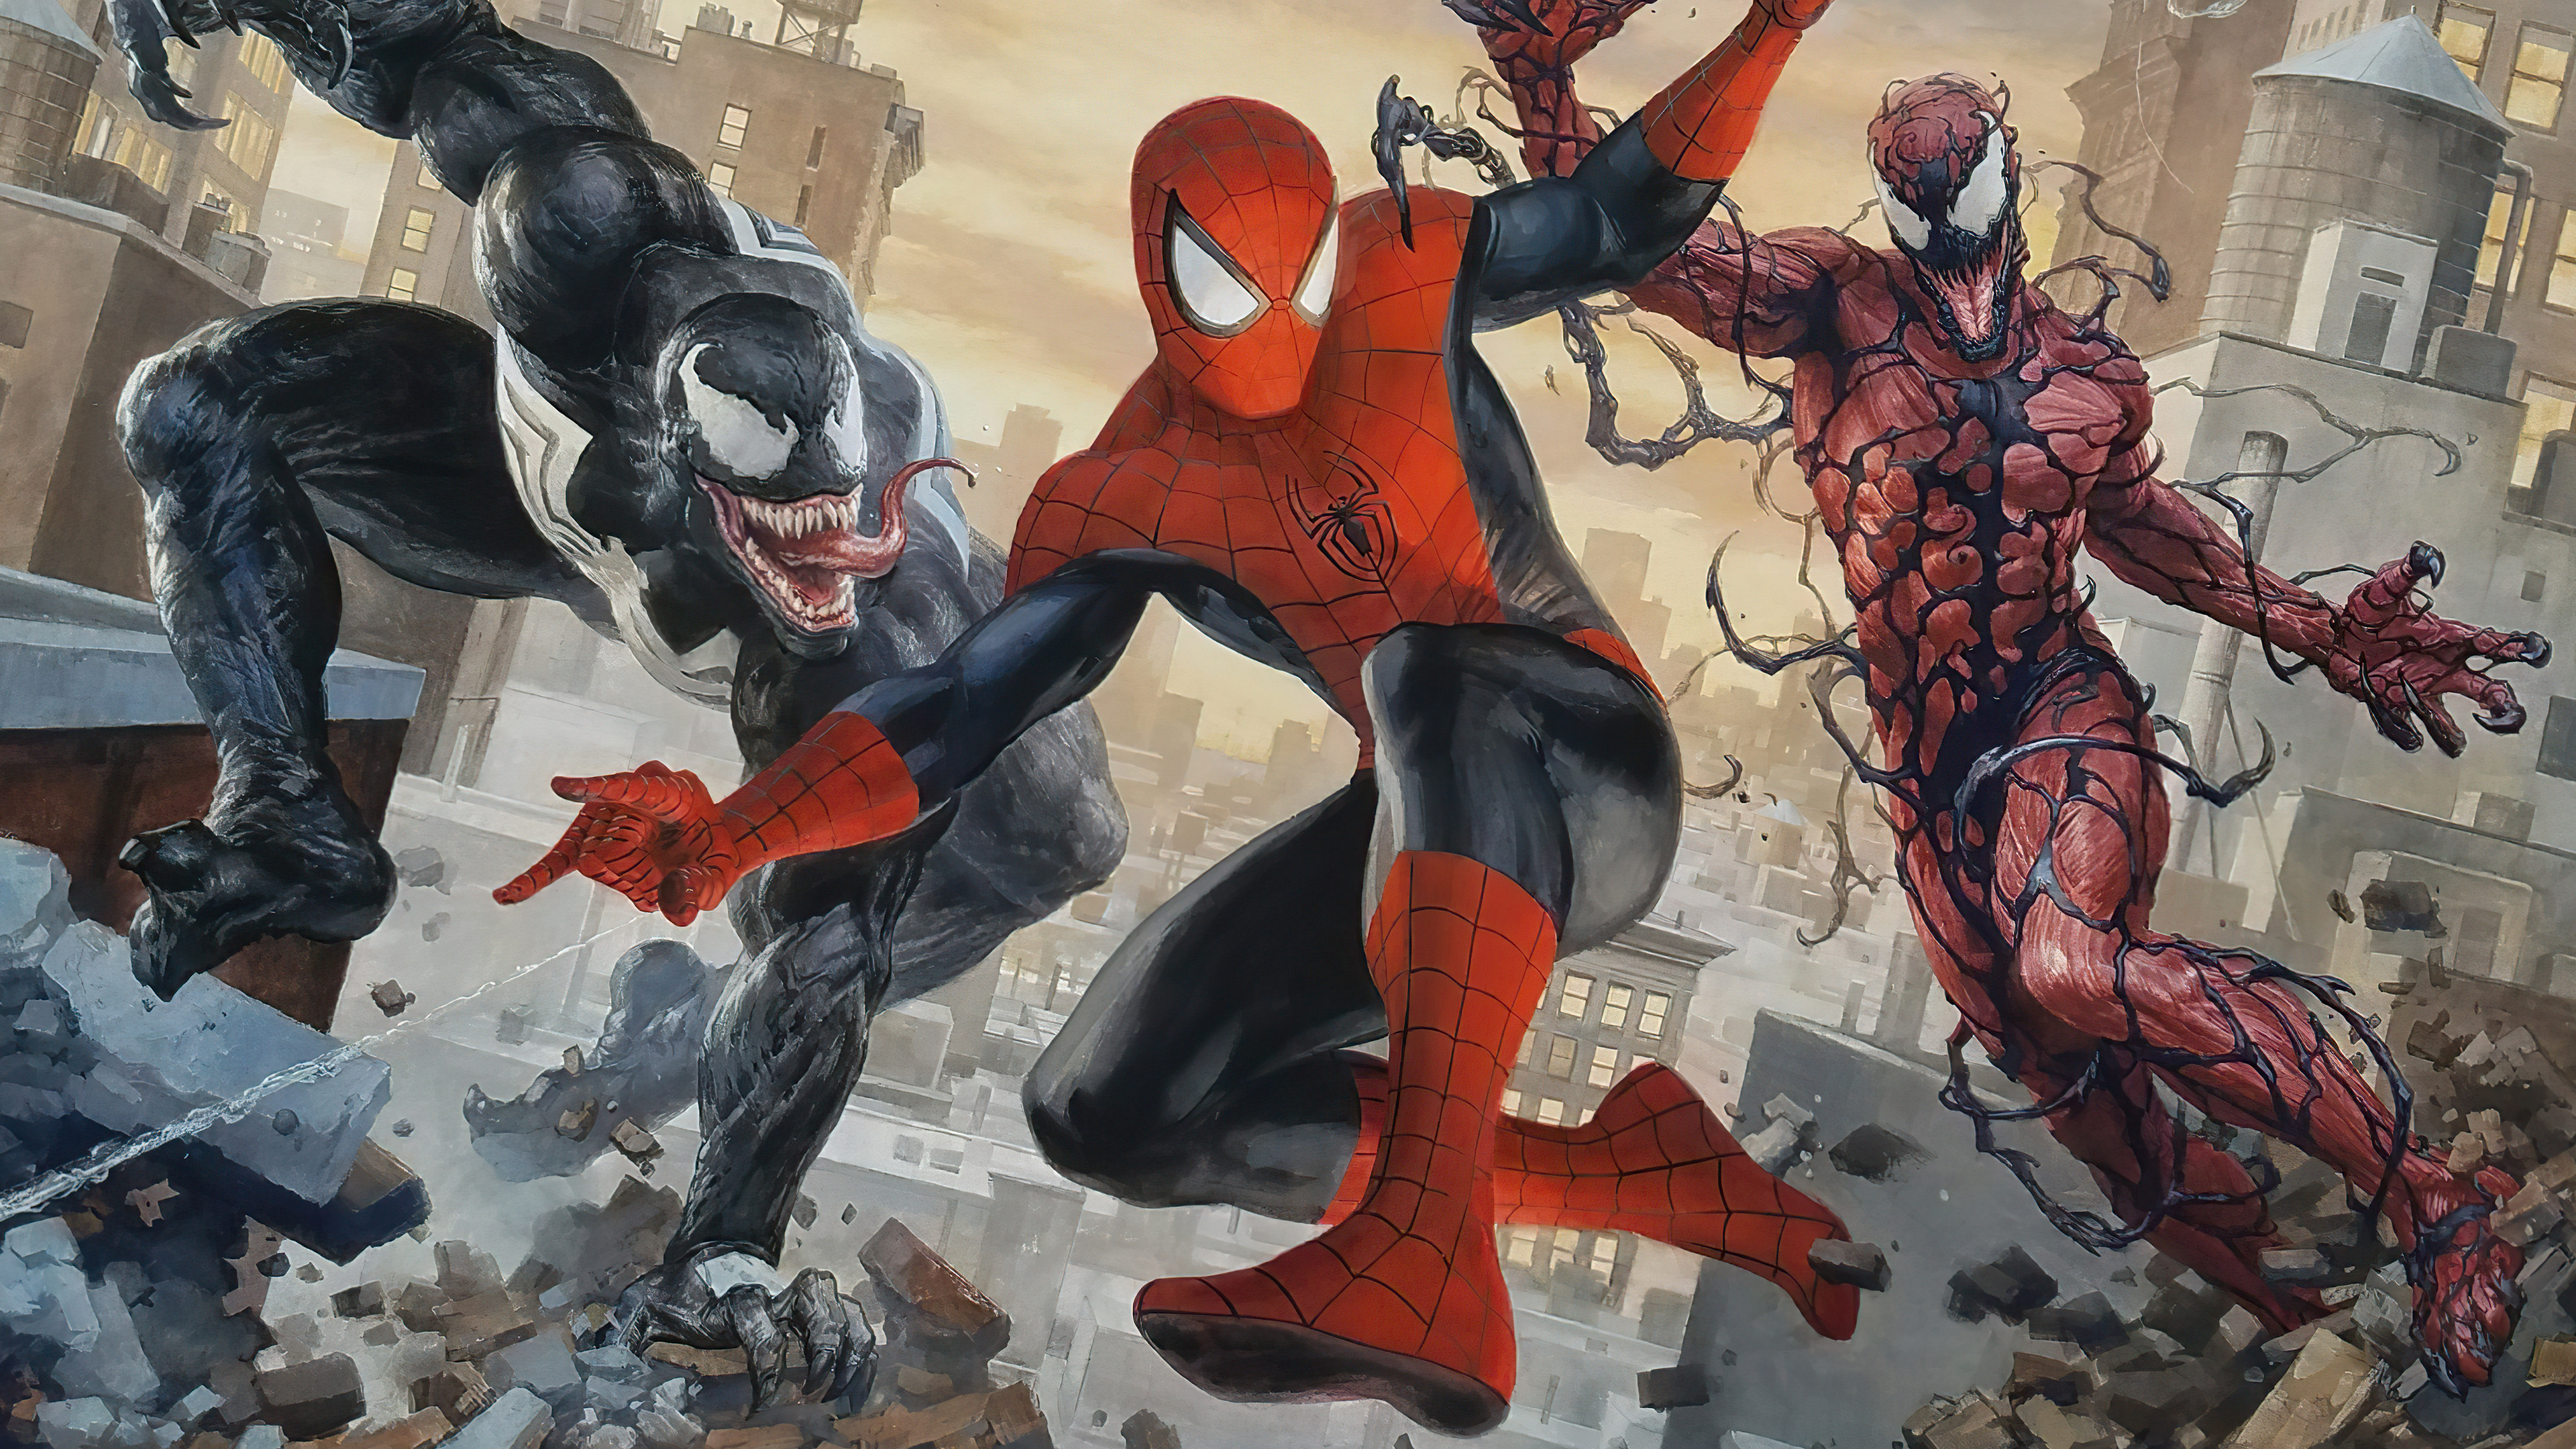 Comics Spider-Man 4k Ultra HD Wallpaper by Paolo Rivera